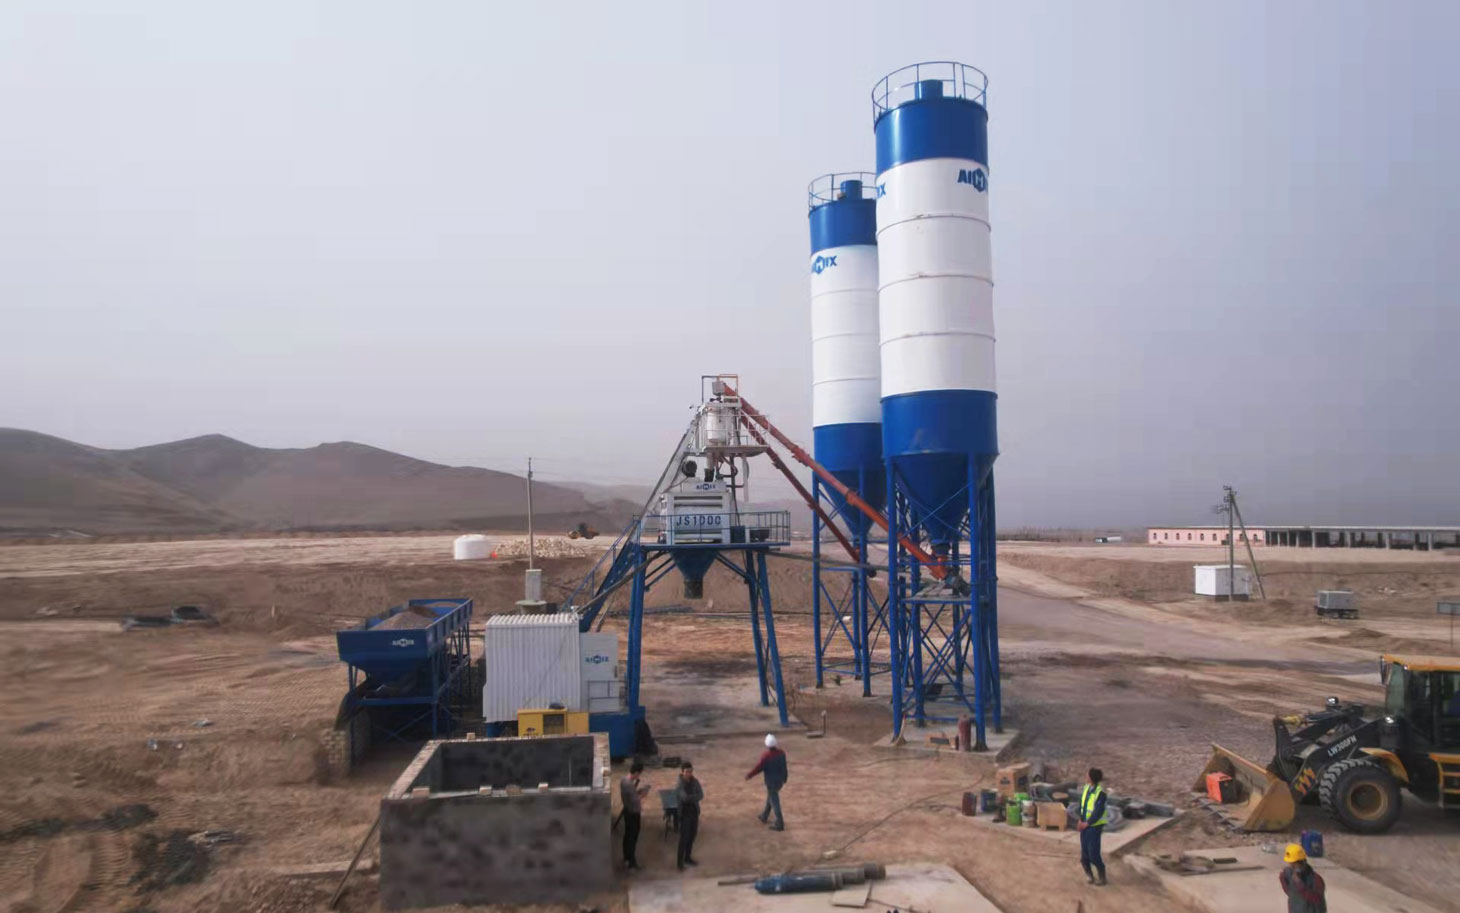 on_site_aj_50_hopper_batching_plant_in_uzbekistan.jpg